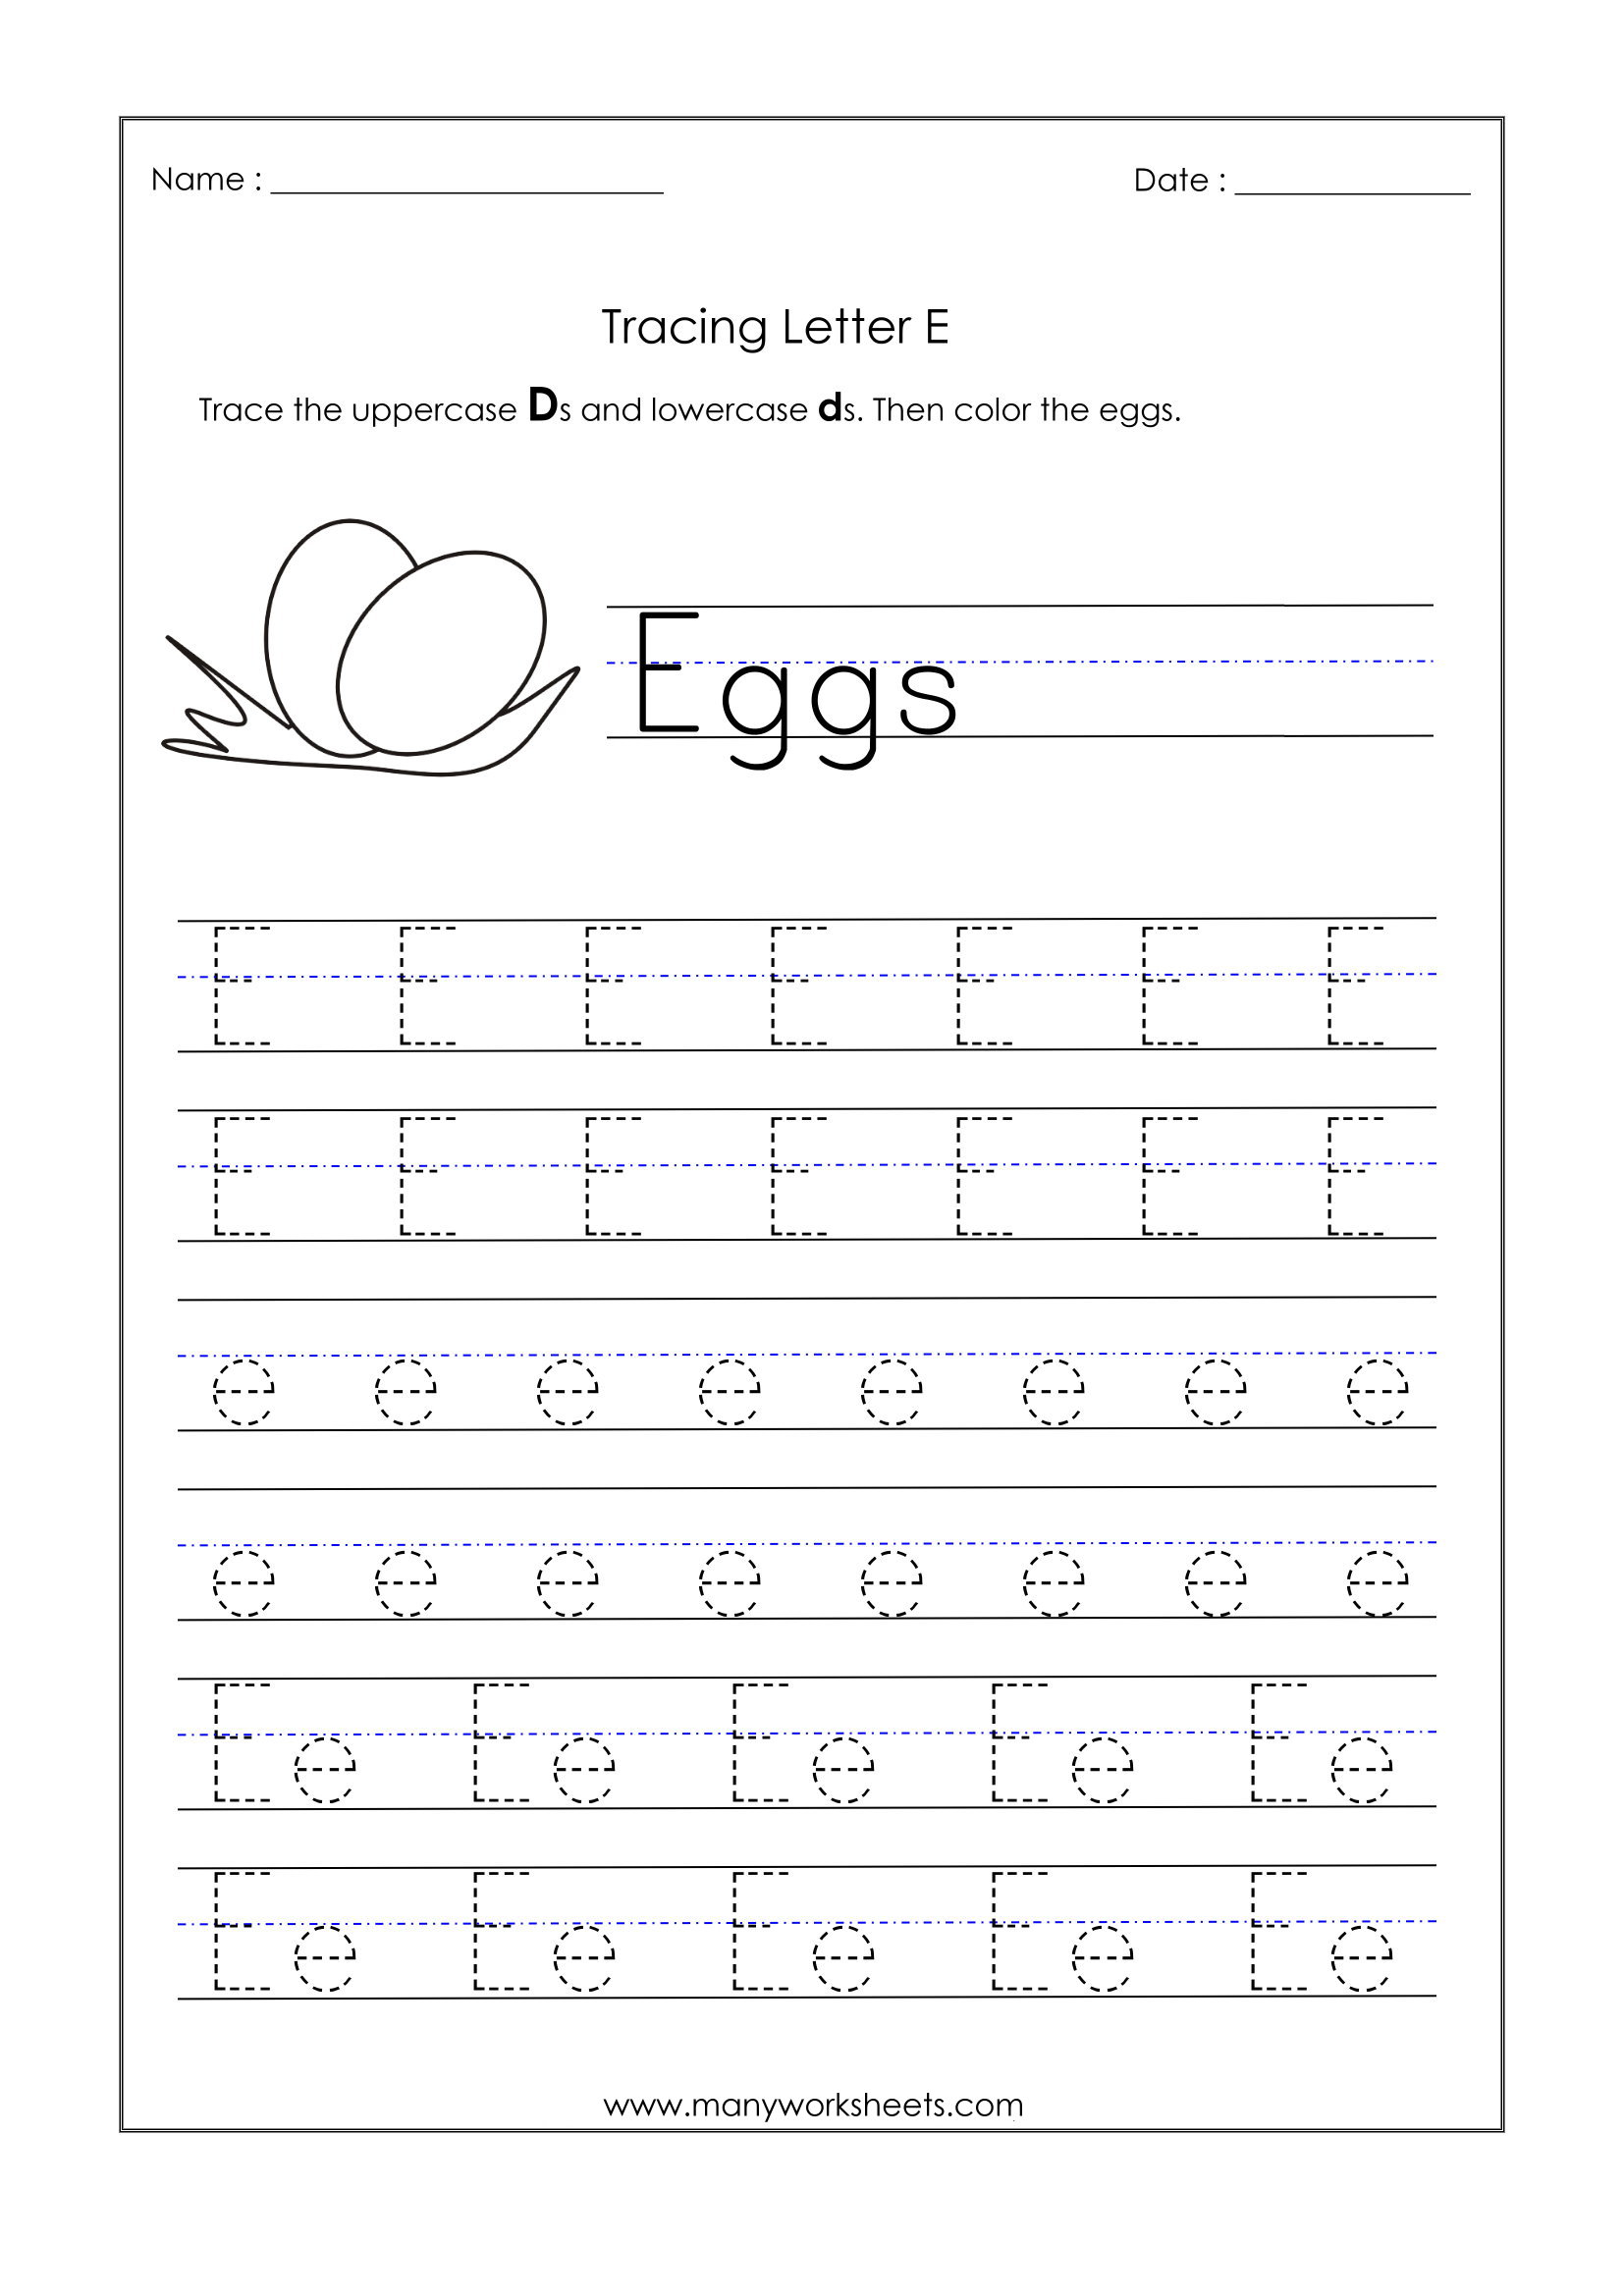 printable-letter-e-tracing-worksheets-for-preschooljpg-12751650